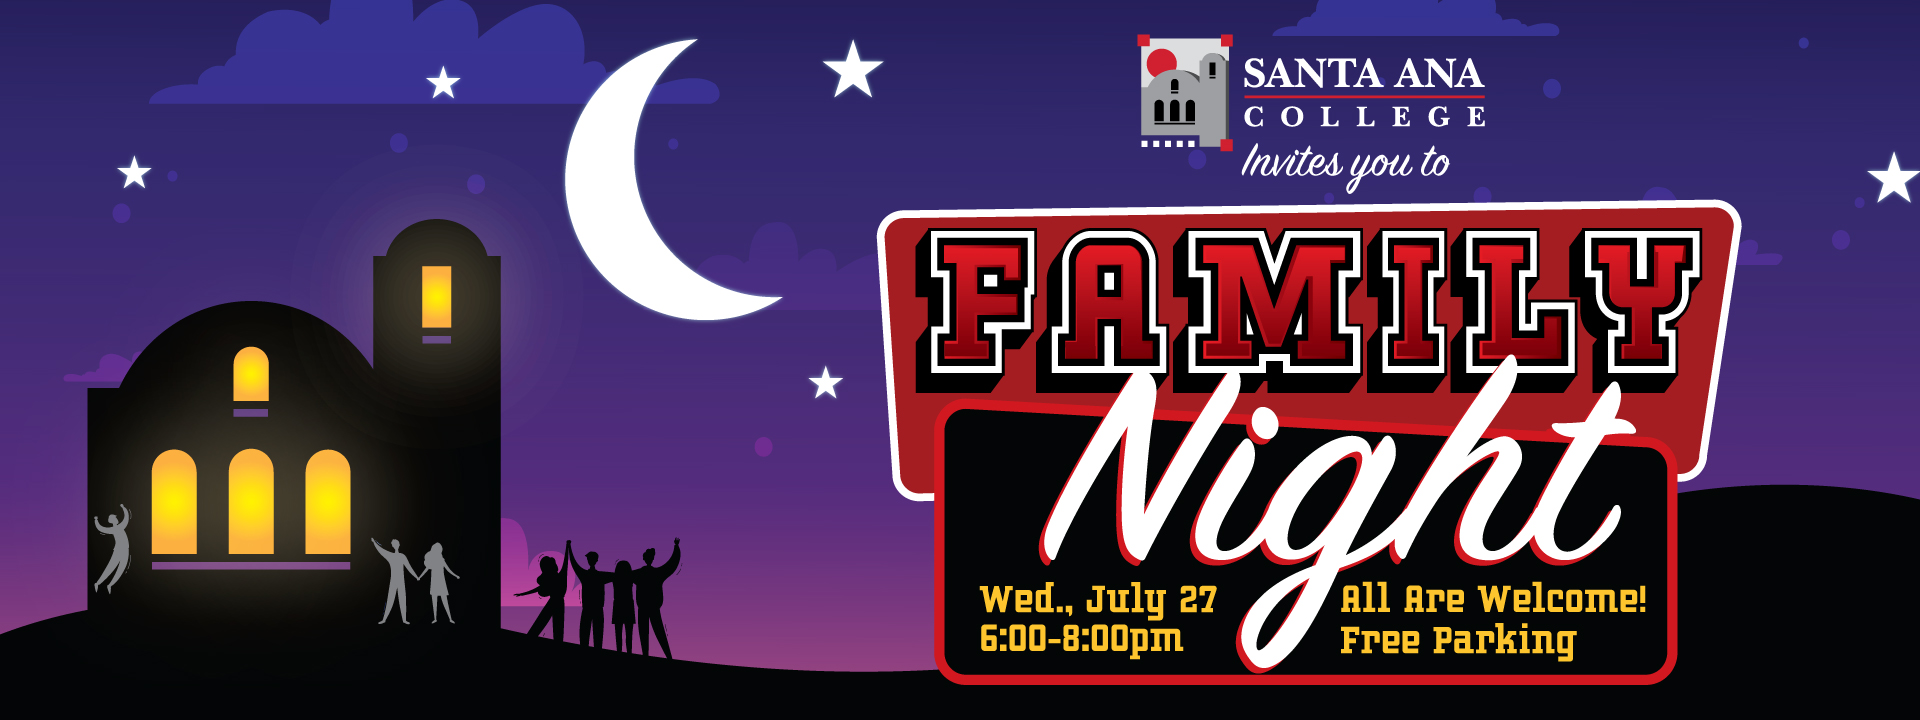 Santa ana college family night banner